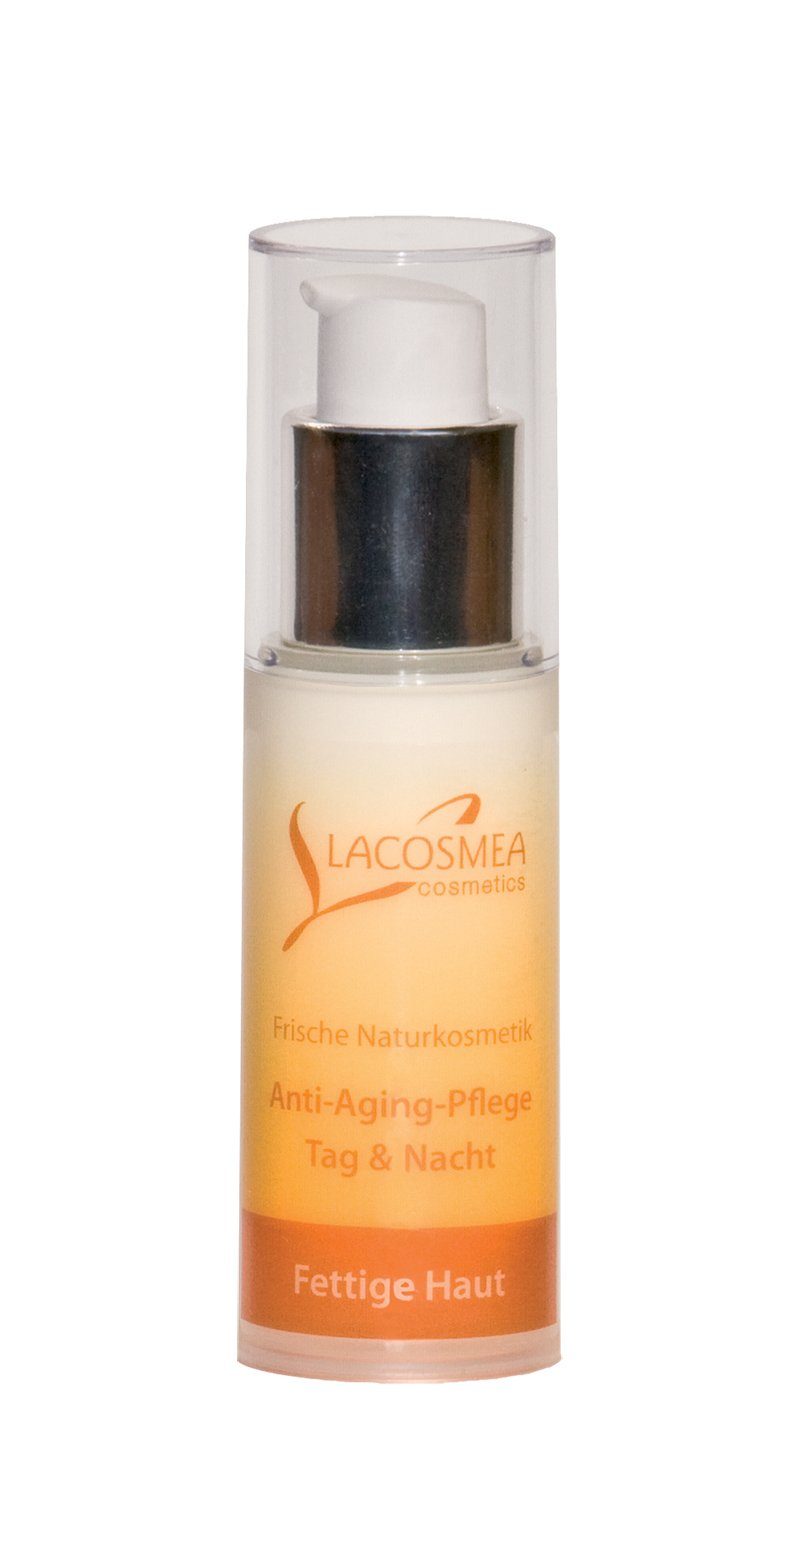 Cosmetics für Anti Pflege Haut Gesichtspflege Aging fettige Lacosmea